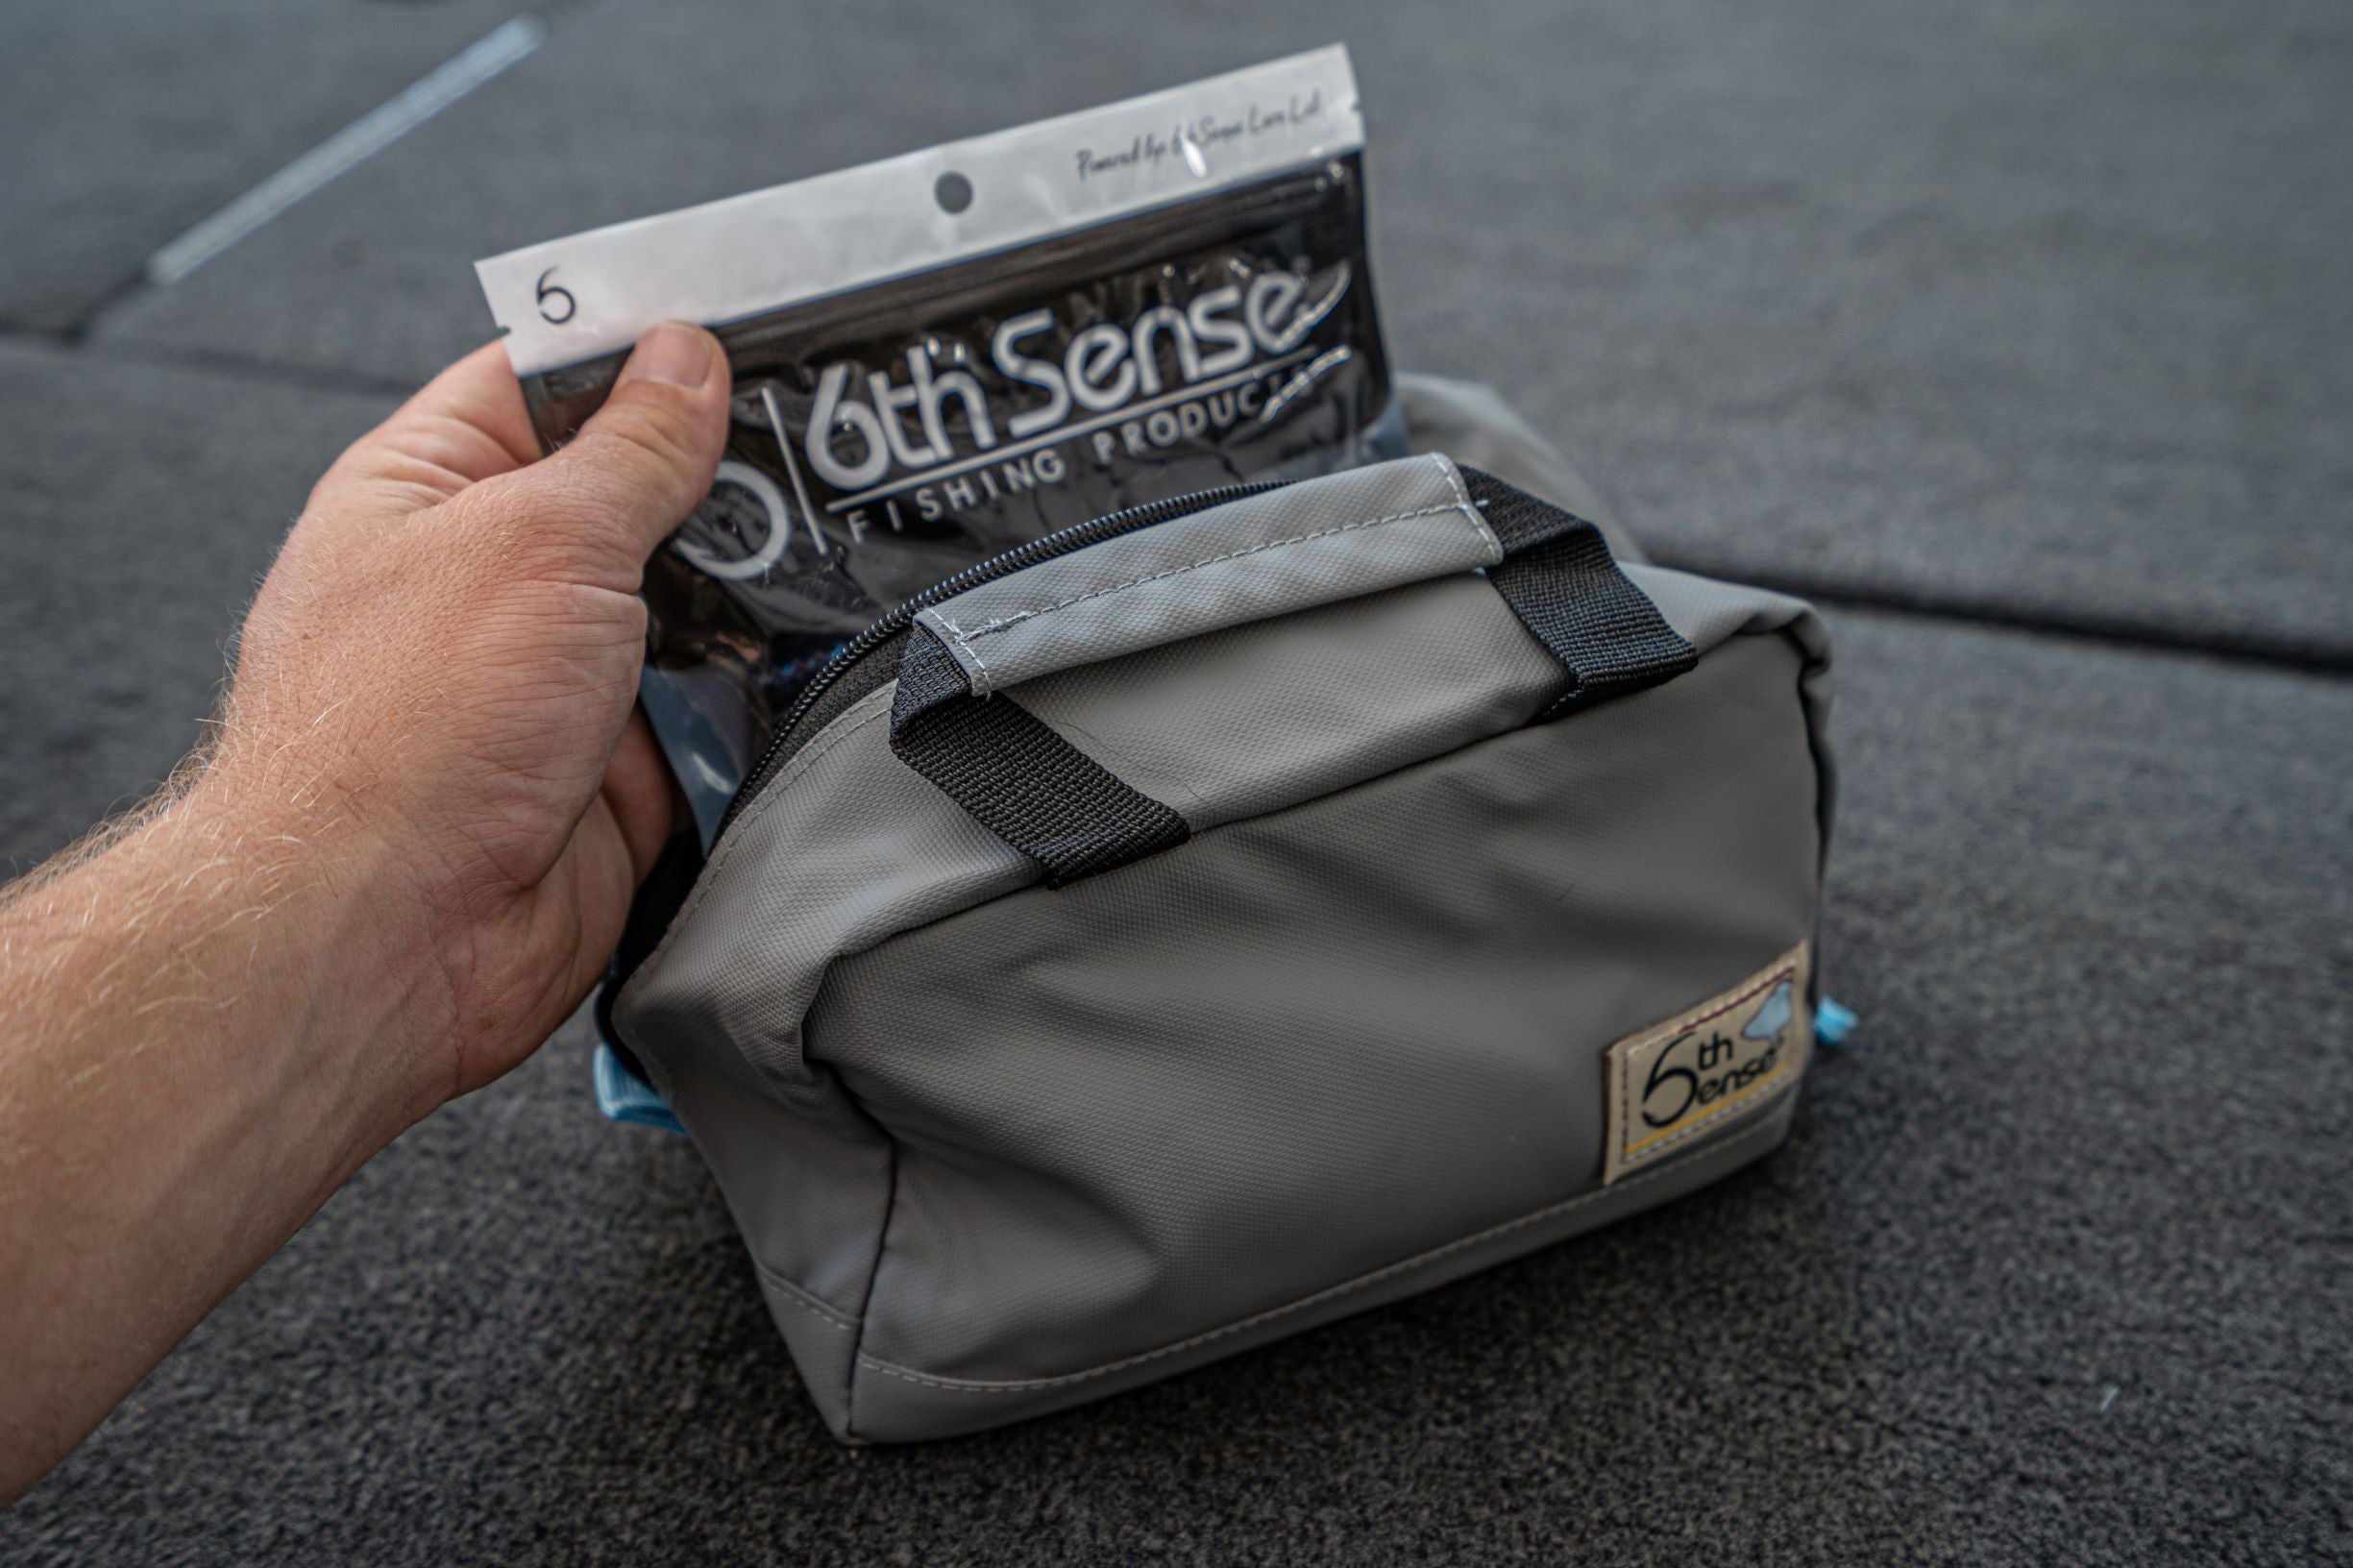 6th Sense Fishing Small Bait Bag (holds 10-15 soft plastic packs)